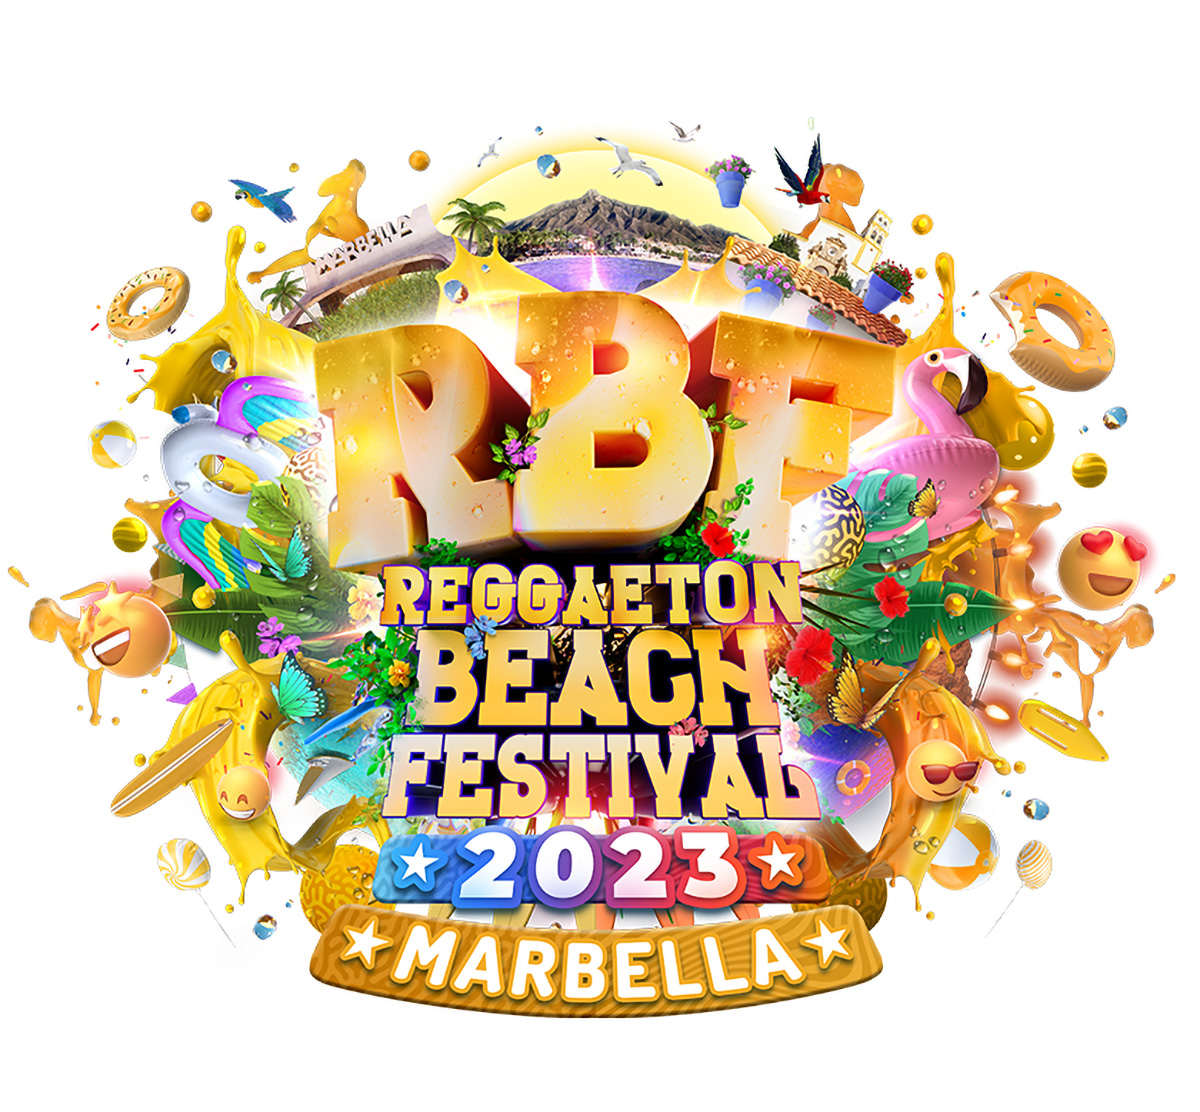 RBF Regeton Beach Festival 2023 Marbella